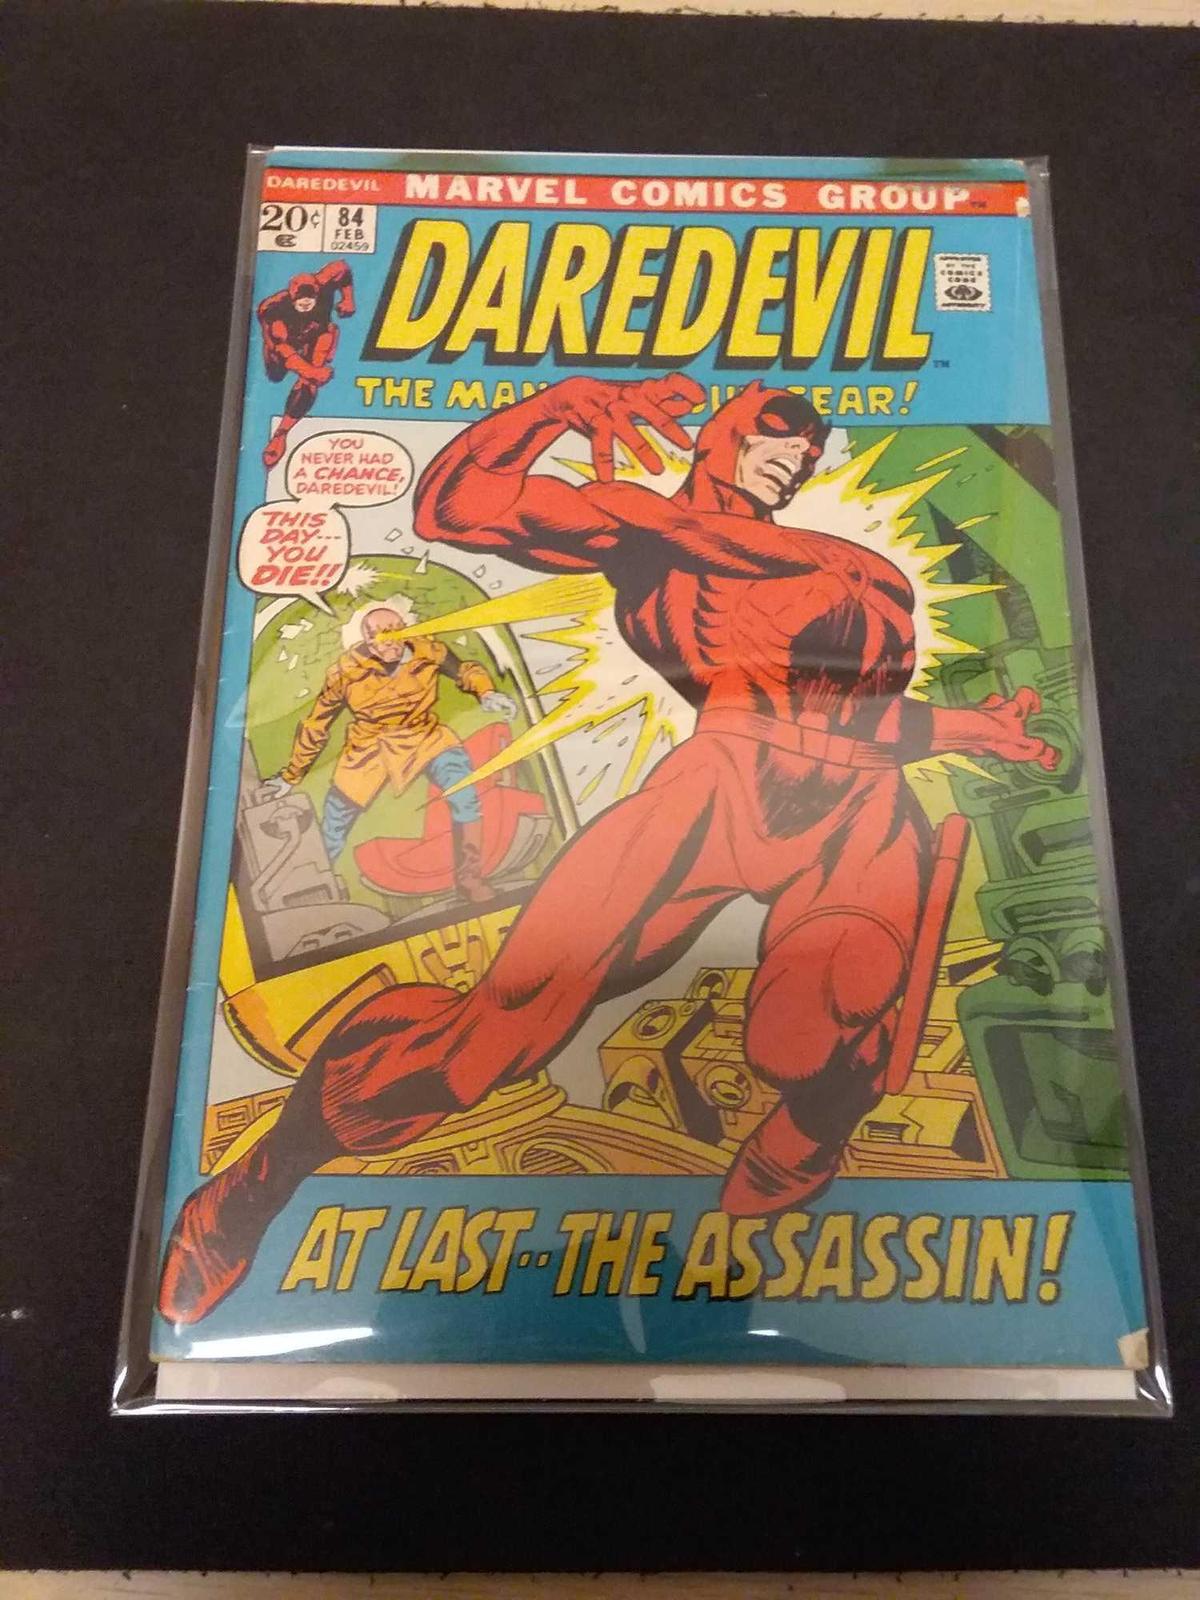 Daredevil #84 Comic Book from Estate Collection